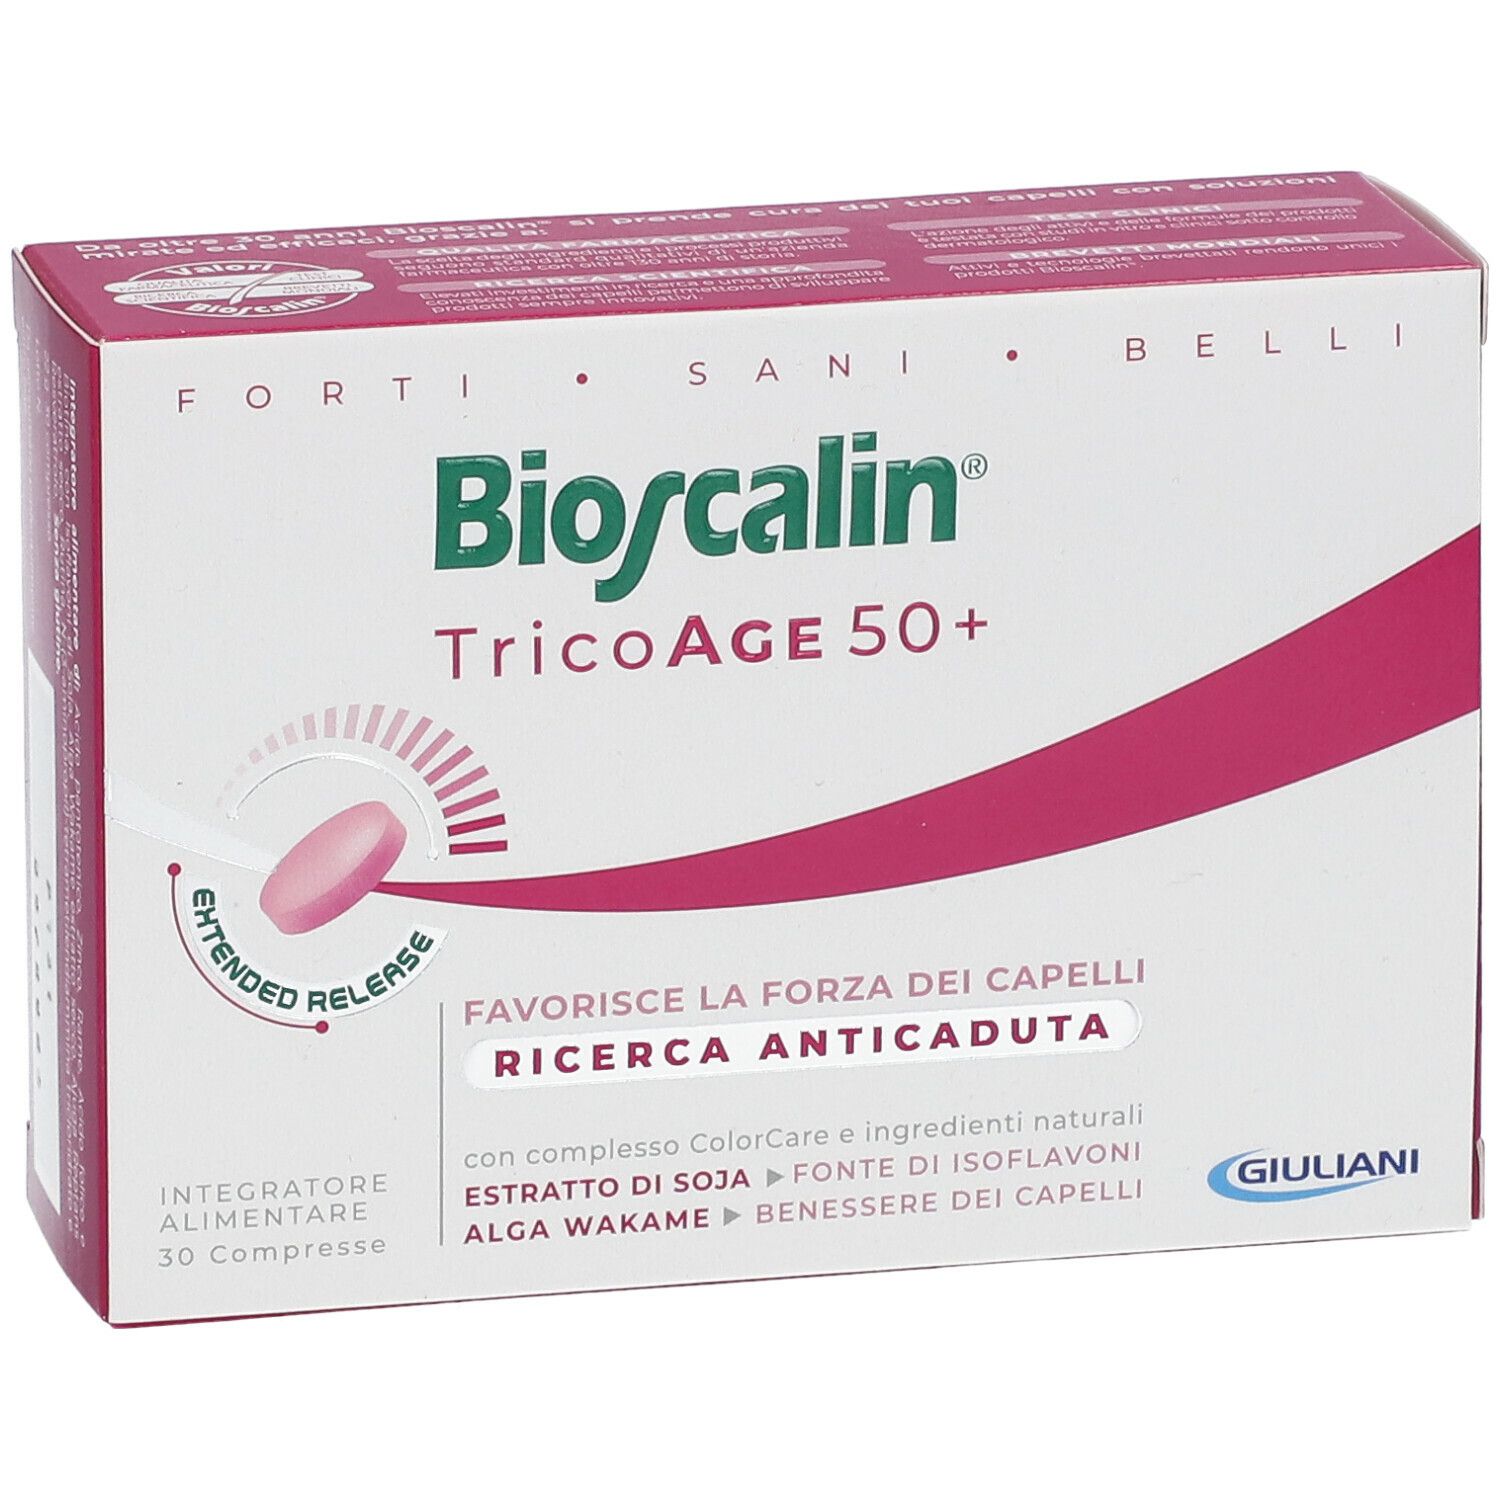 Bioscalin® TricoAGE 50+ BioEquolo®